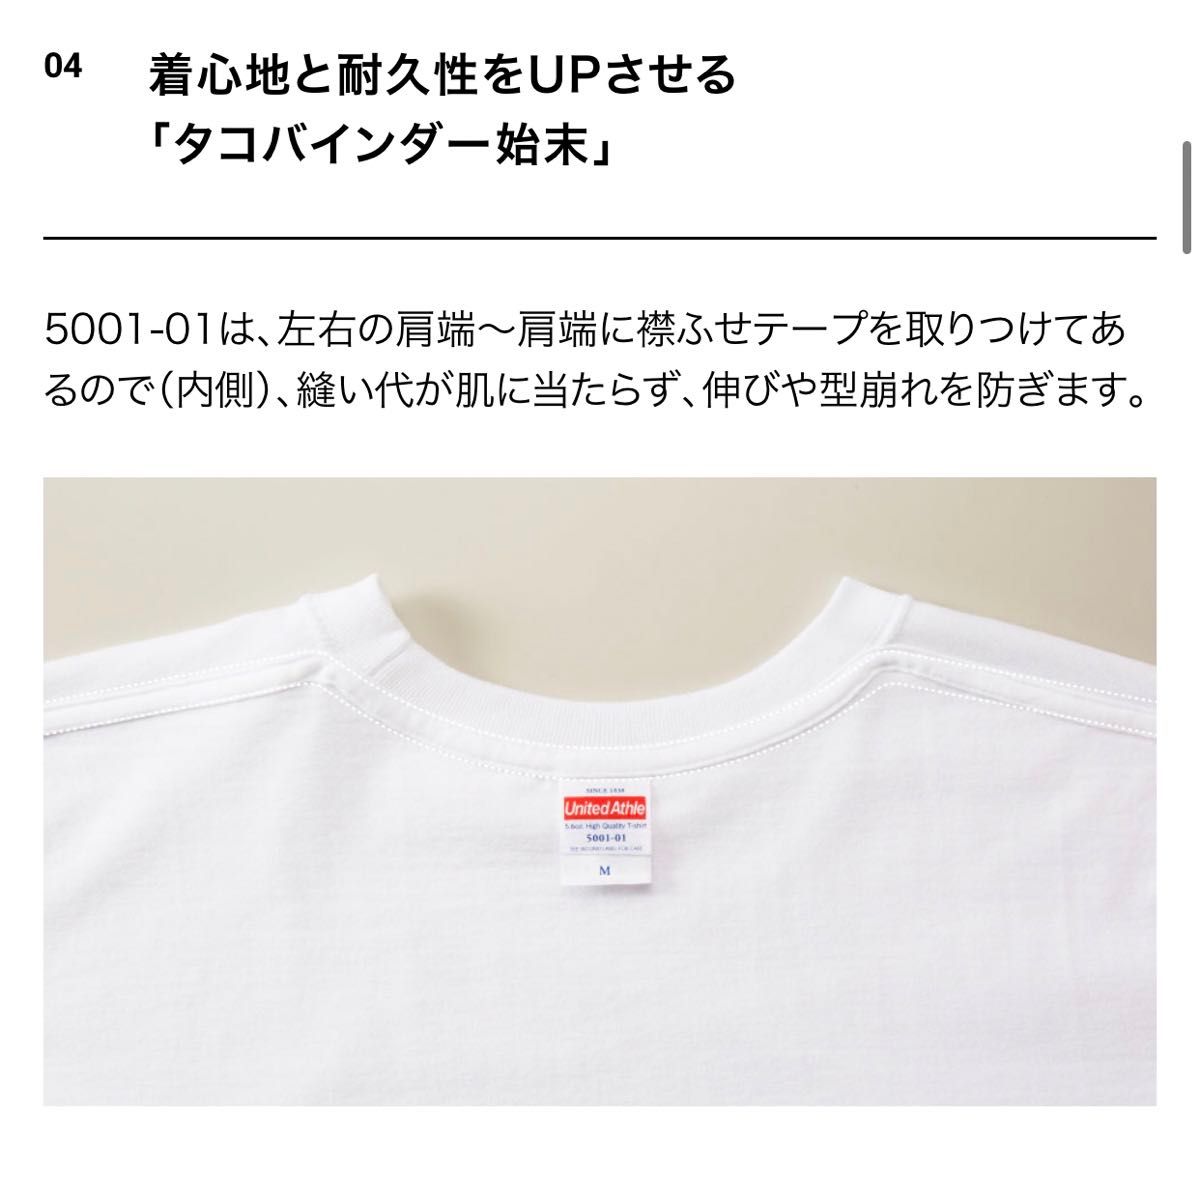 Tシャツ 半袖 5.6オンス ハイクオリティー【5001-01】XL ビリヤードグリーン 綿100% 2枚セット 圧縮発送